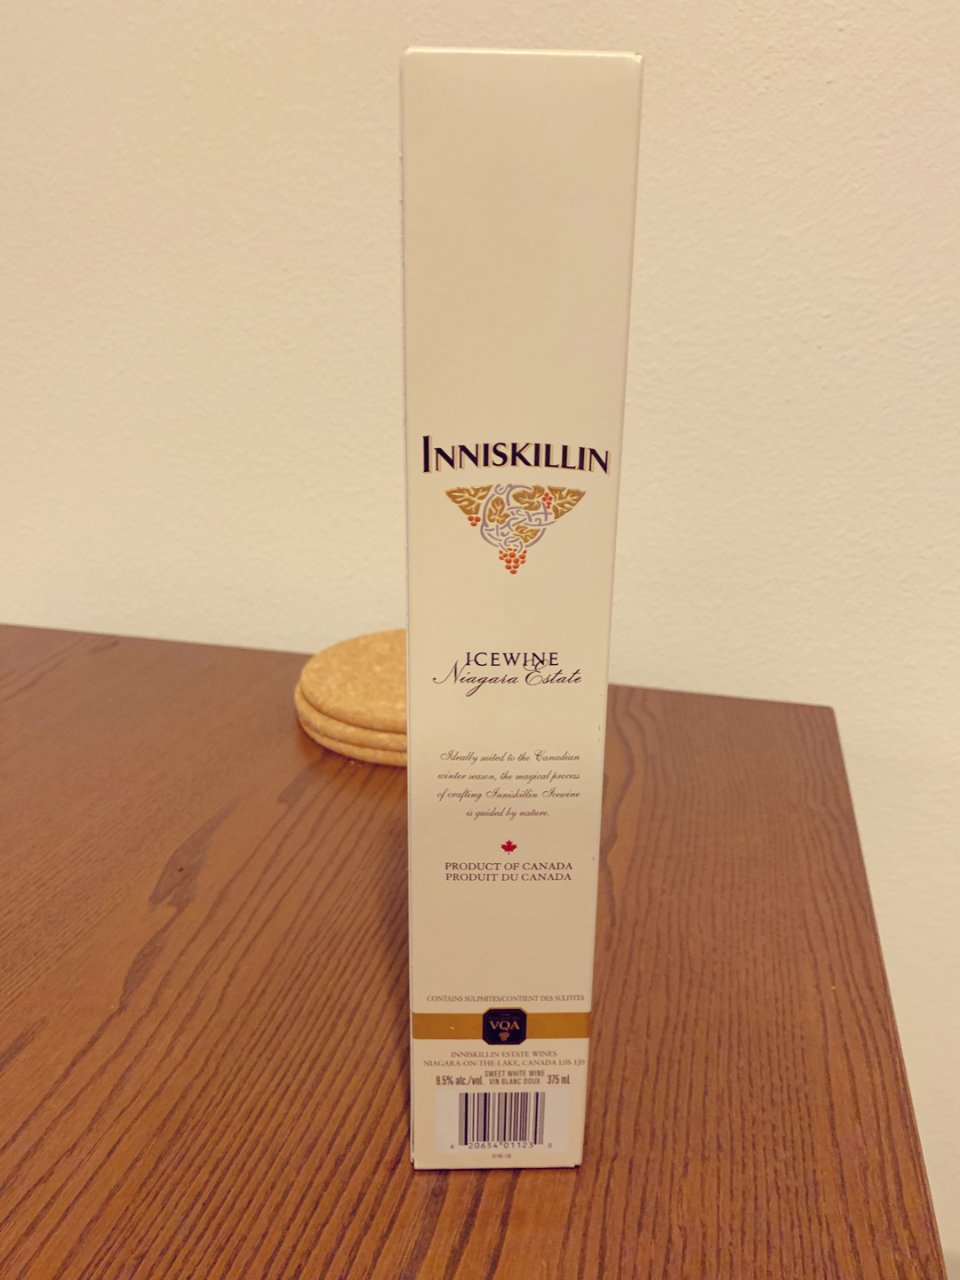 Ice wine,Inniskillin